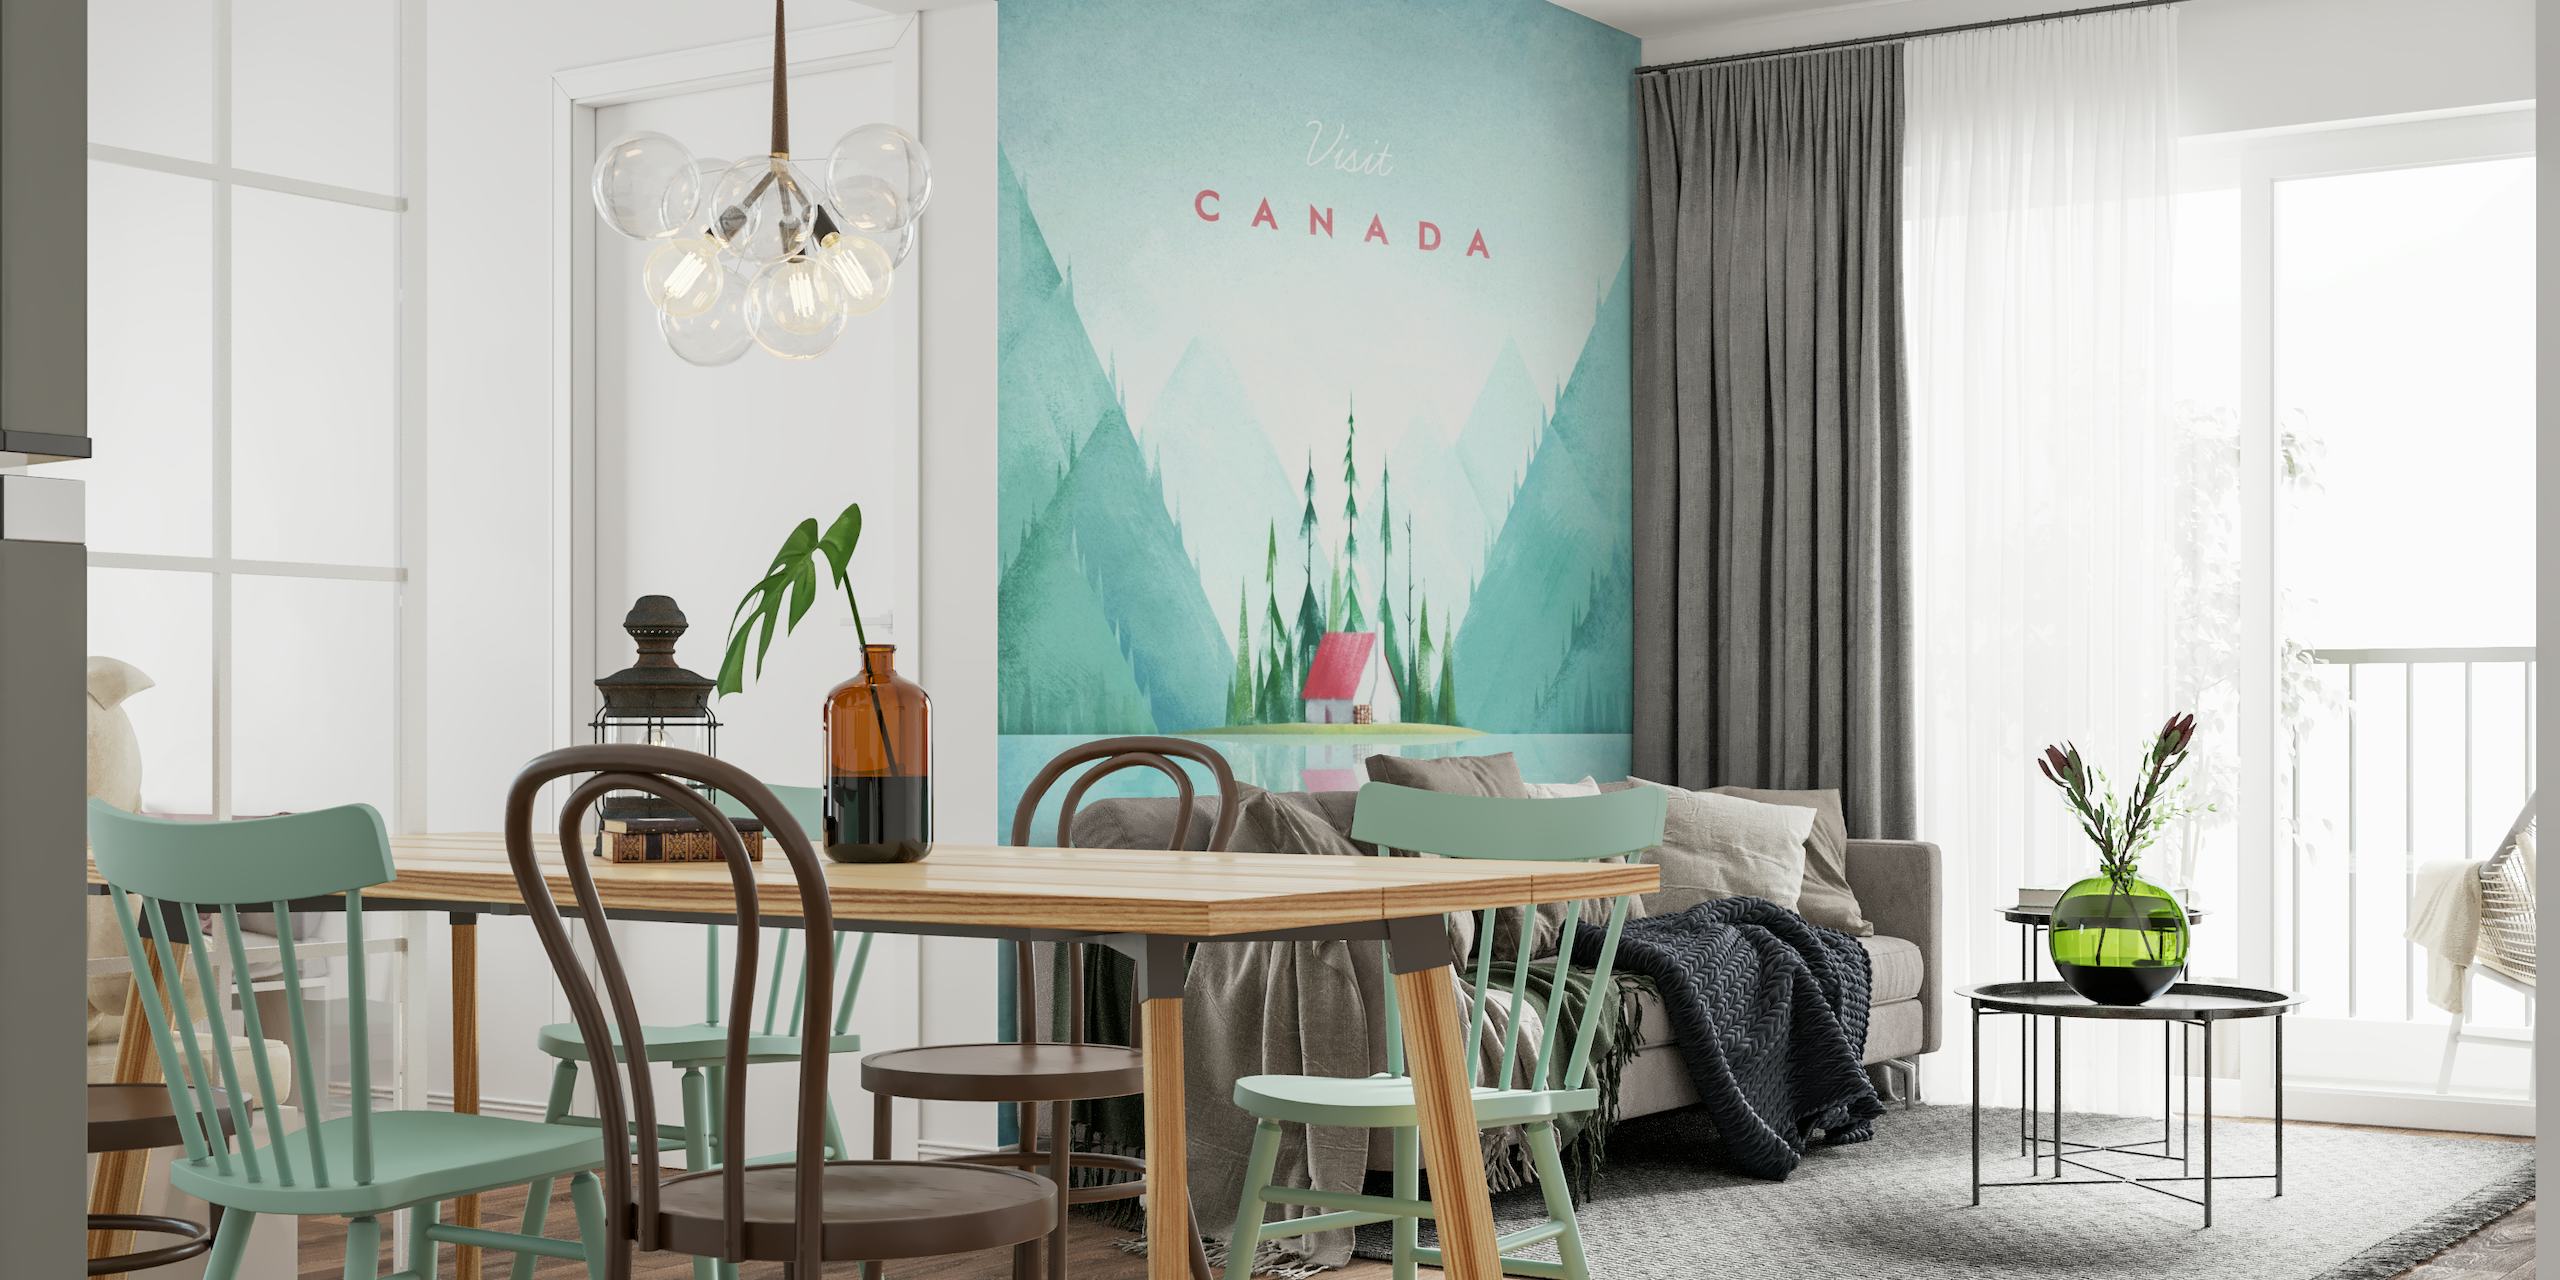 Canada Travel Poster behang